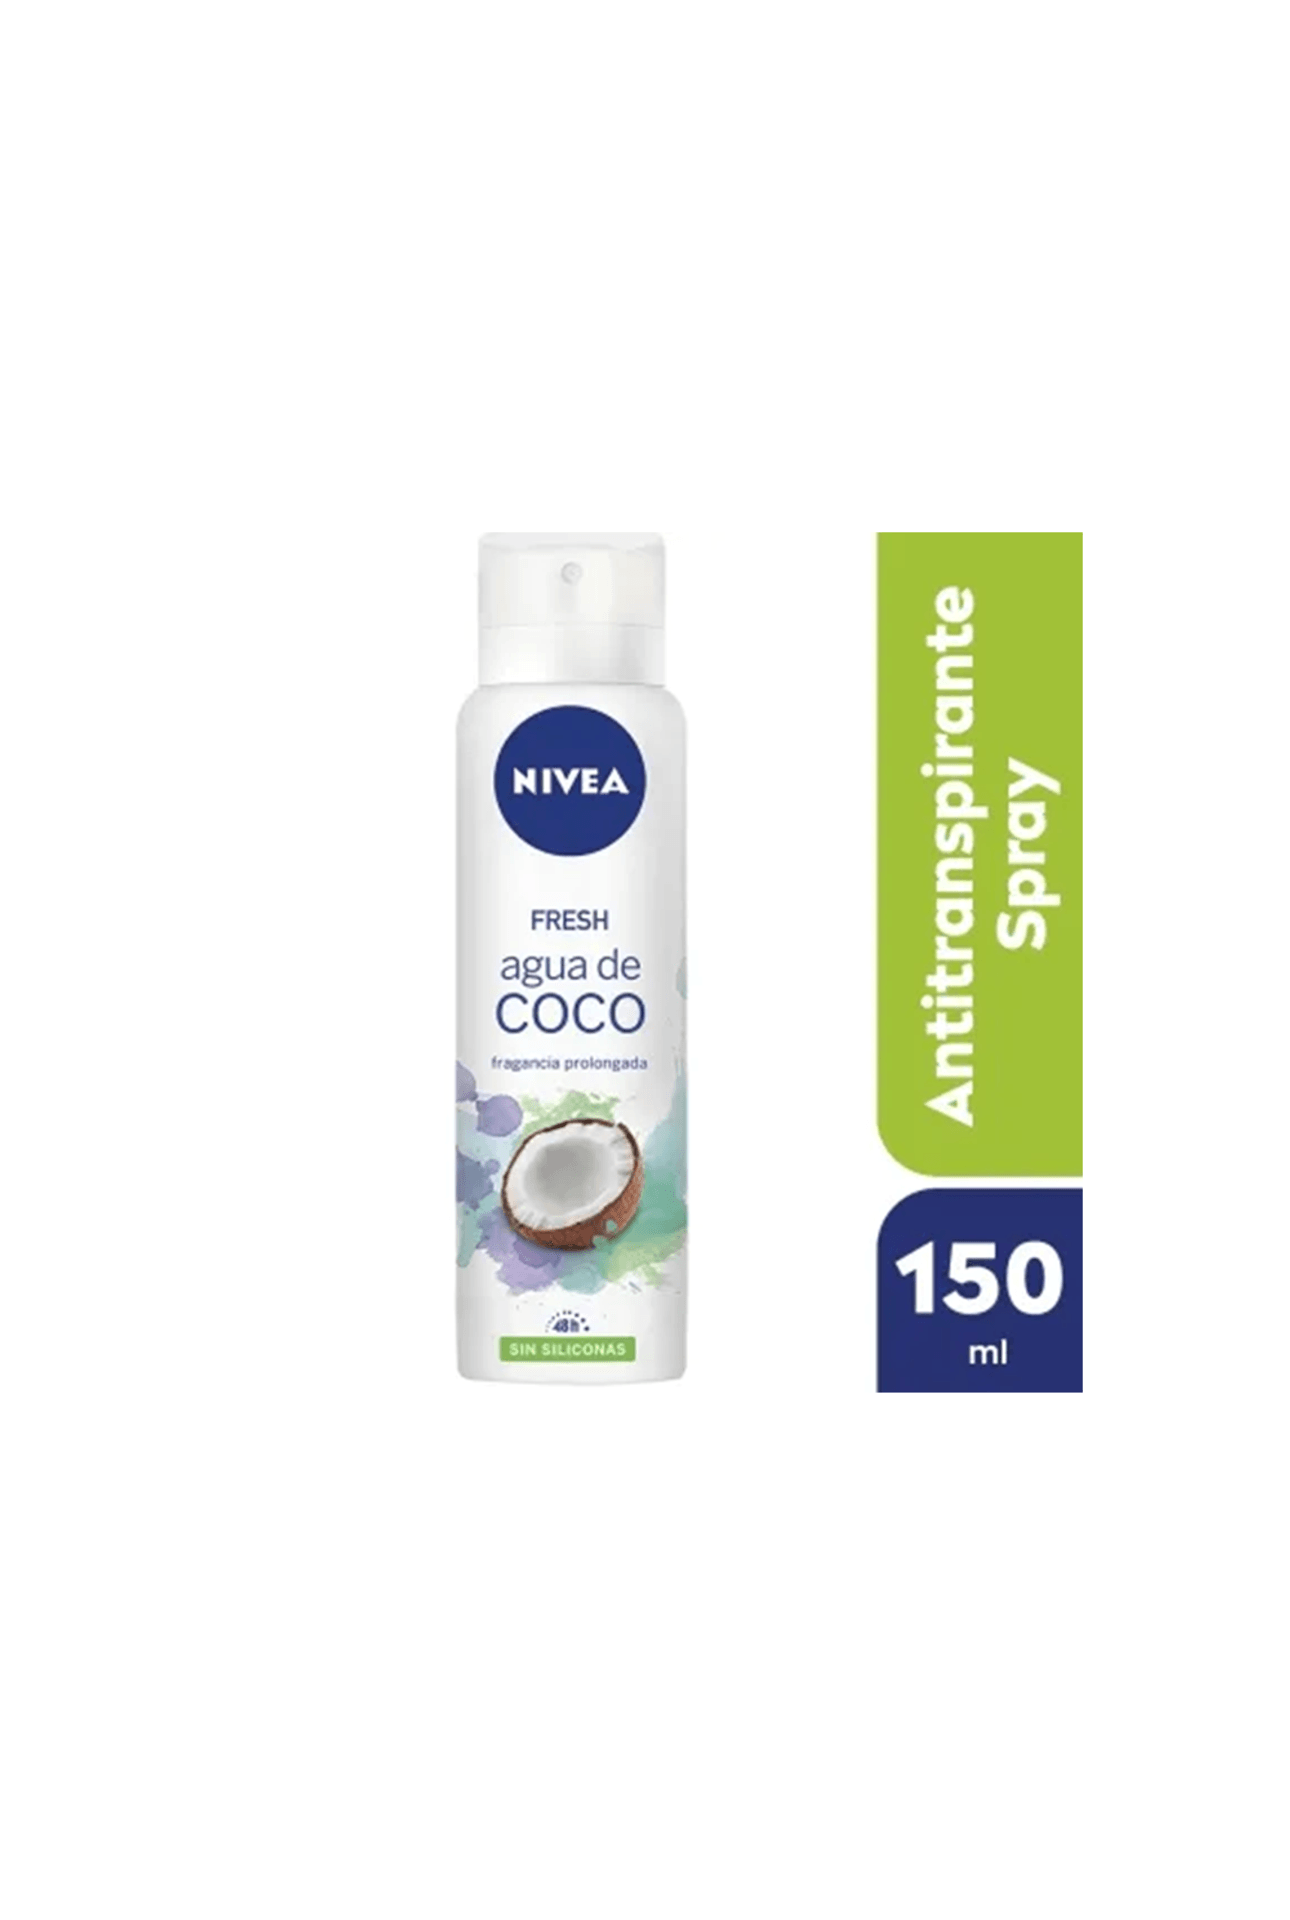 Nivea-Antitranspirante-Nivea-Fresh-Agua-de-Coco-x-150-ml-4005900985699_img1